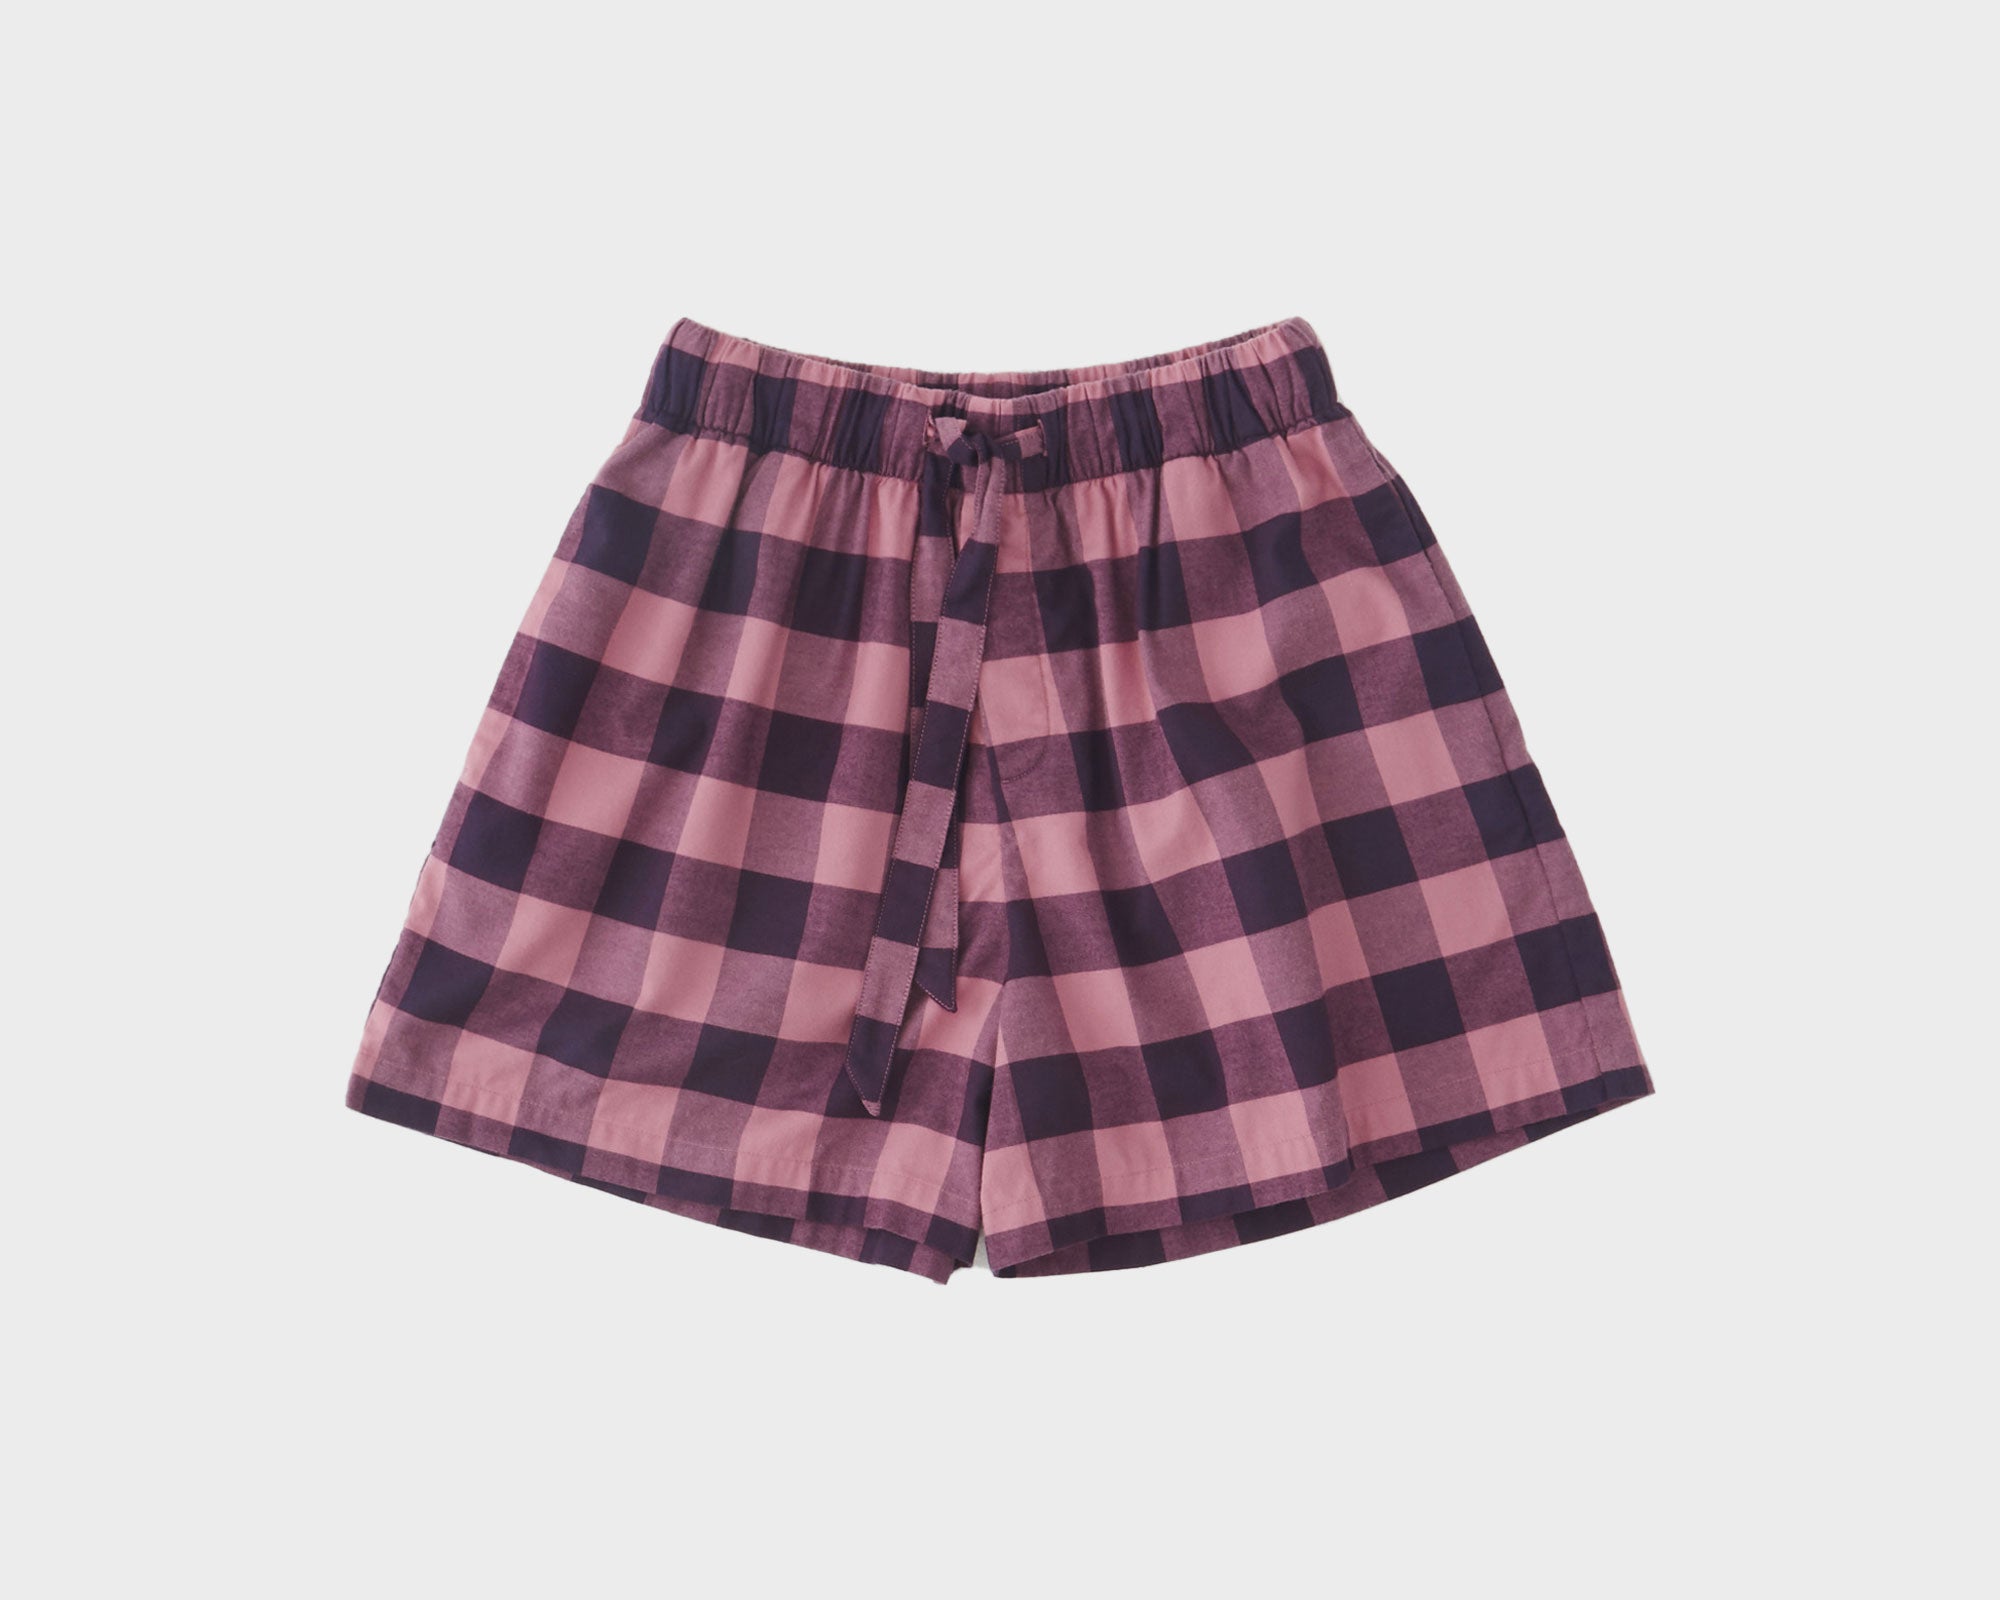 Plaid Flannel Shorts - Black and pink plaid